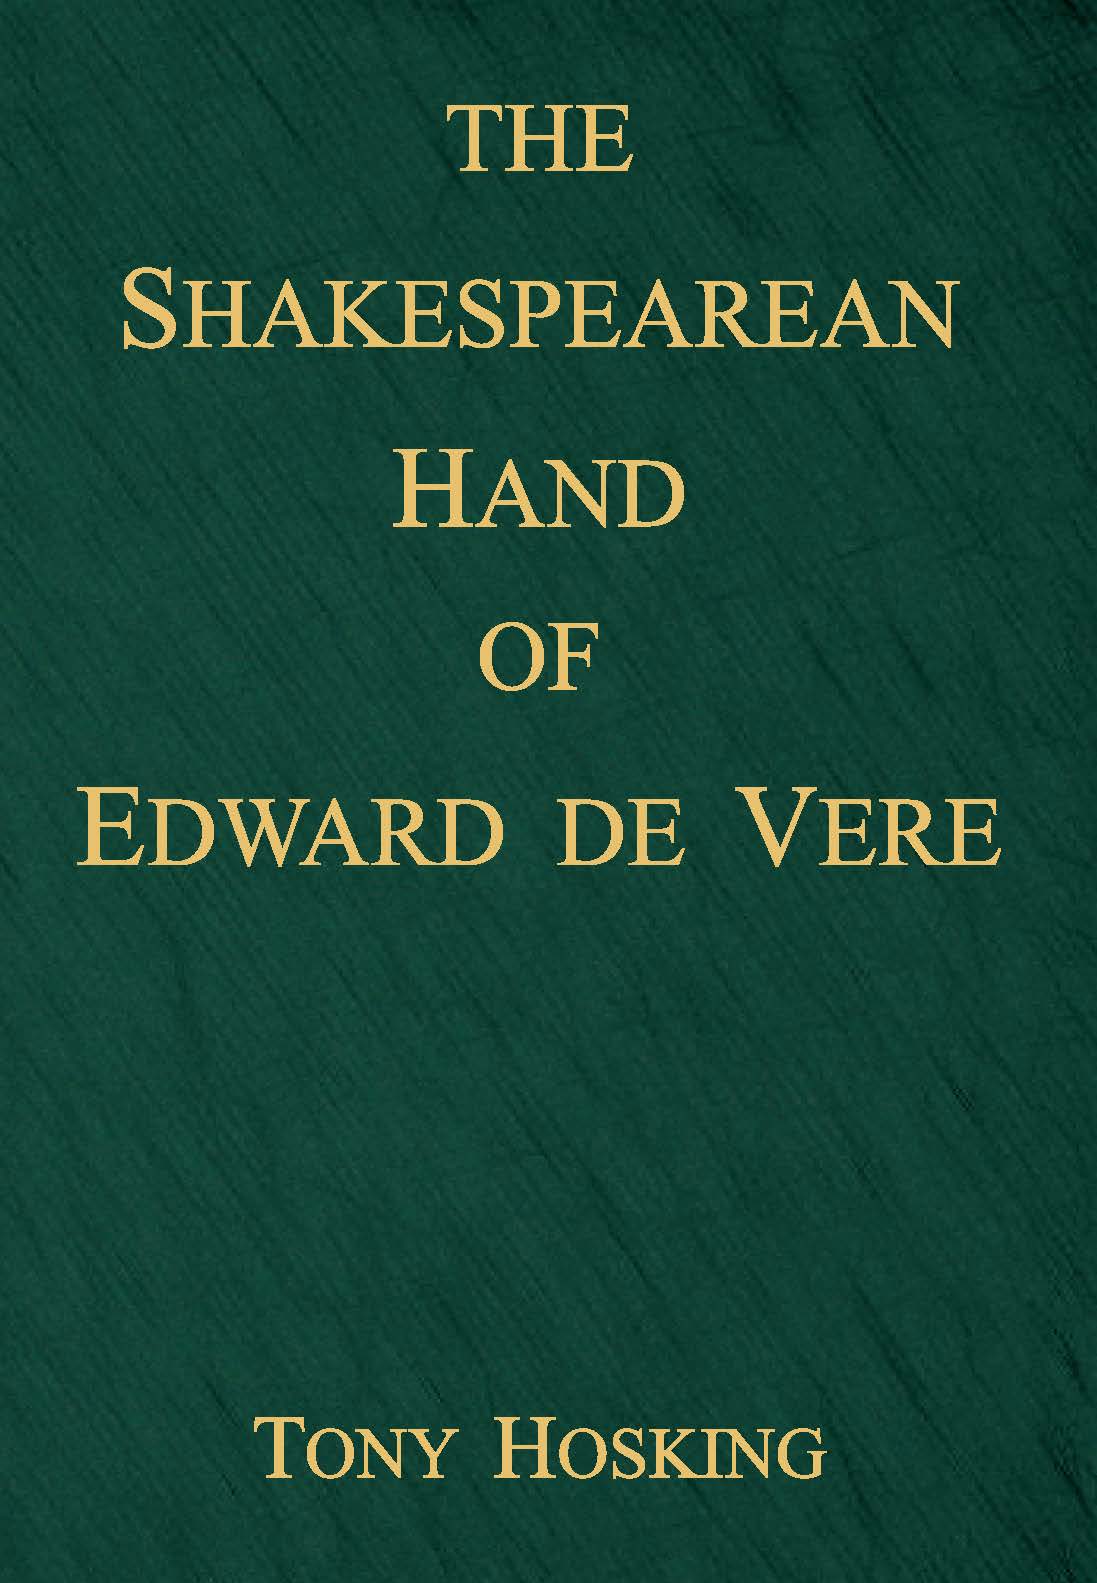 The Shakespearean Hand of Edward de Vere (2023) by Tony Hosking